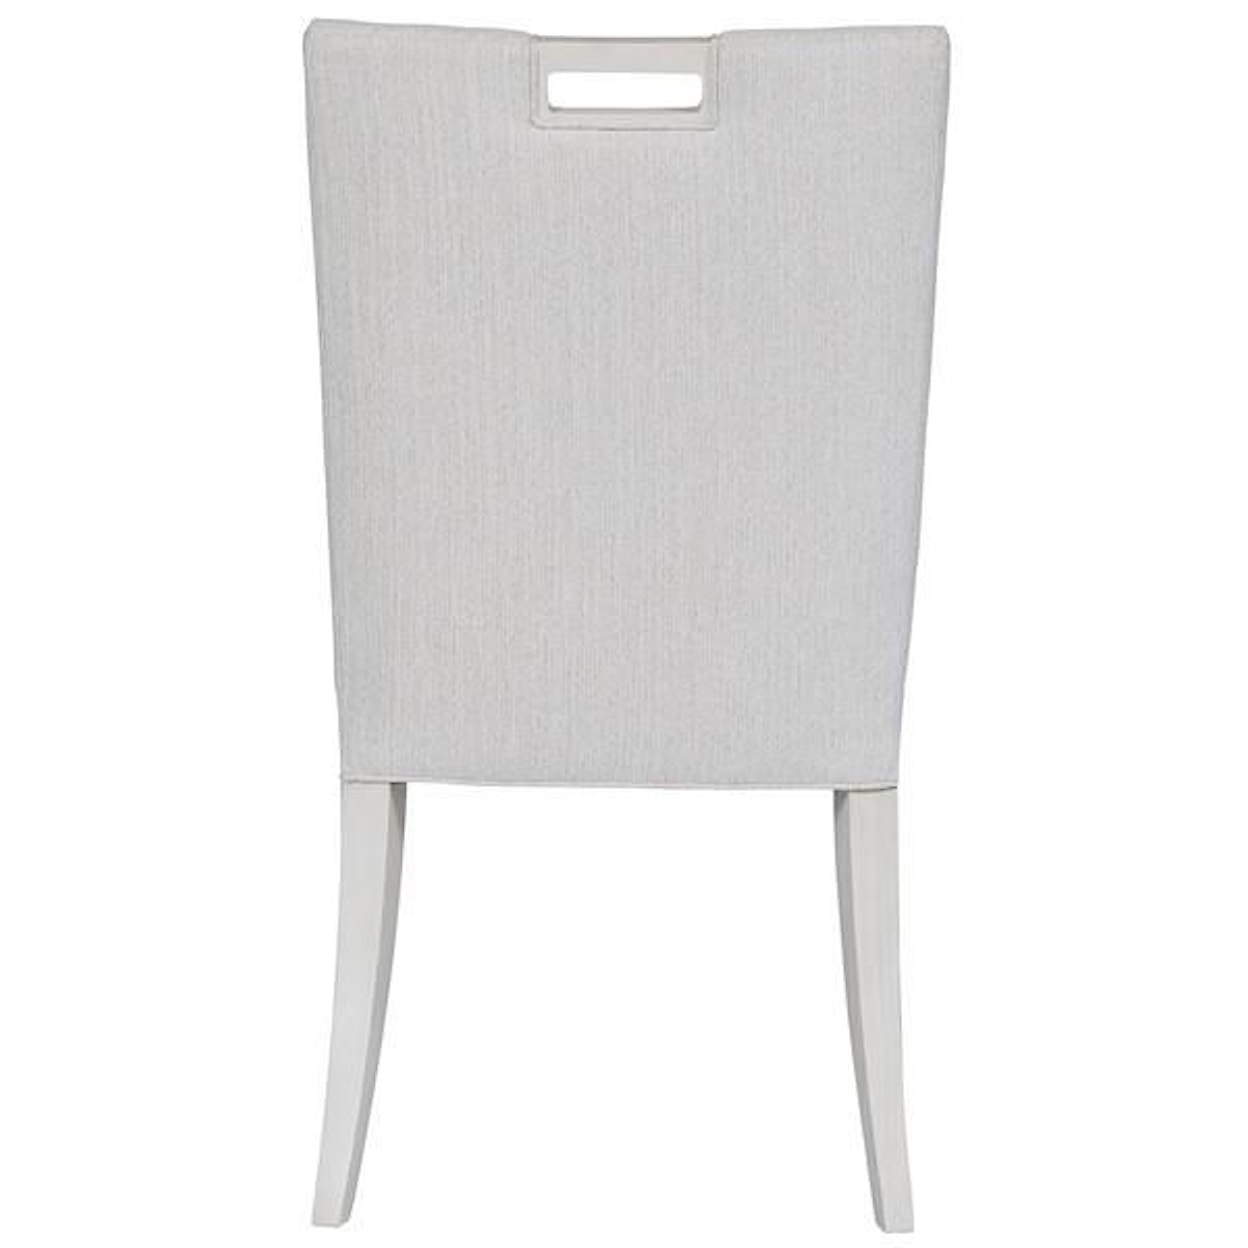 Vanguard Furniture Parkhurst Dining Side Chair